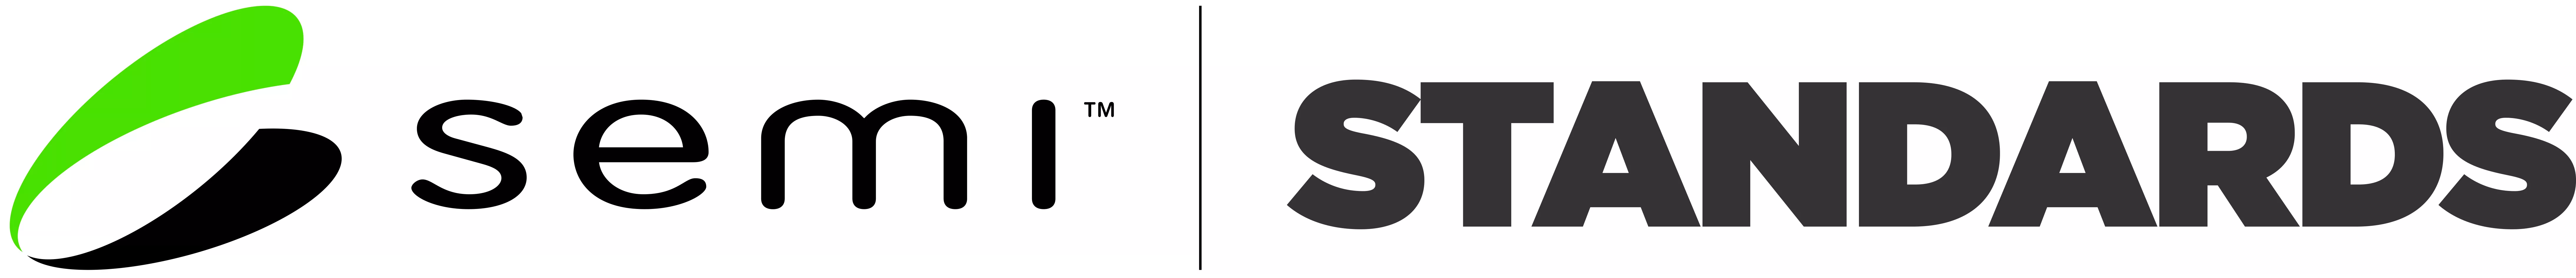 SEMI Standards lockup logo